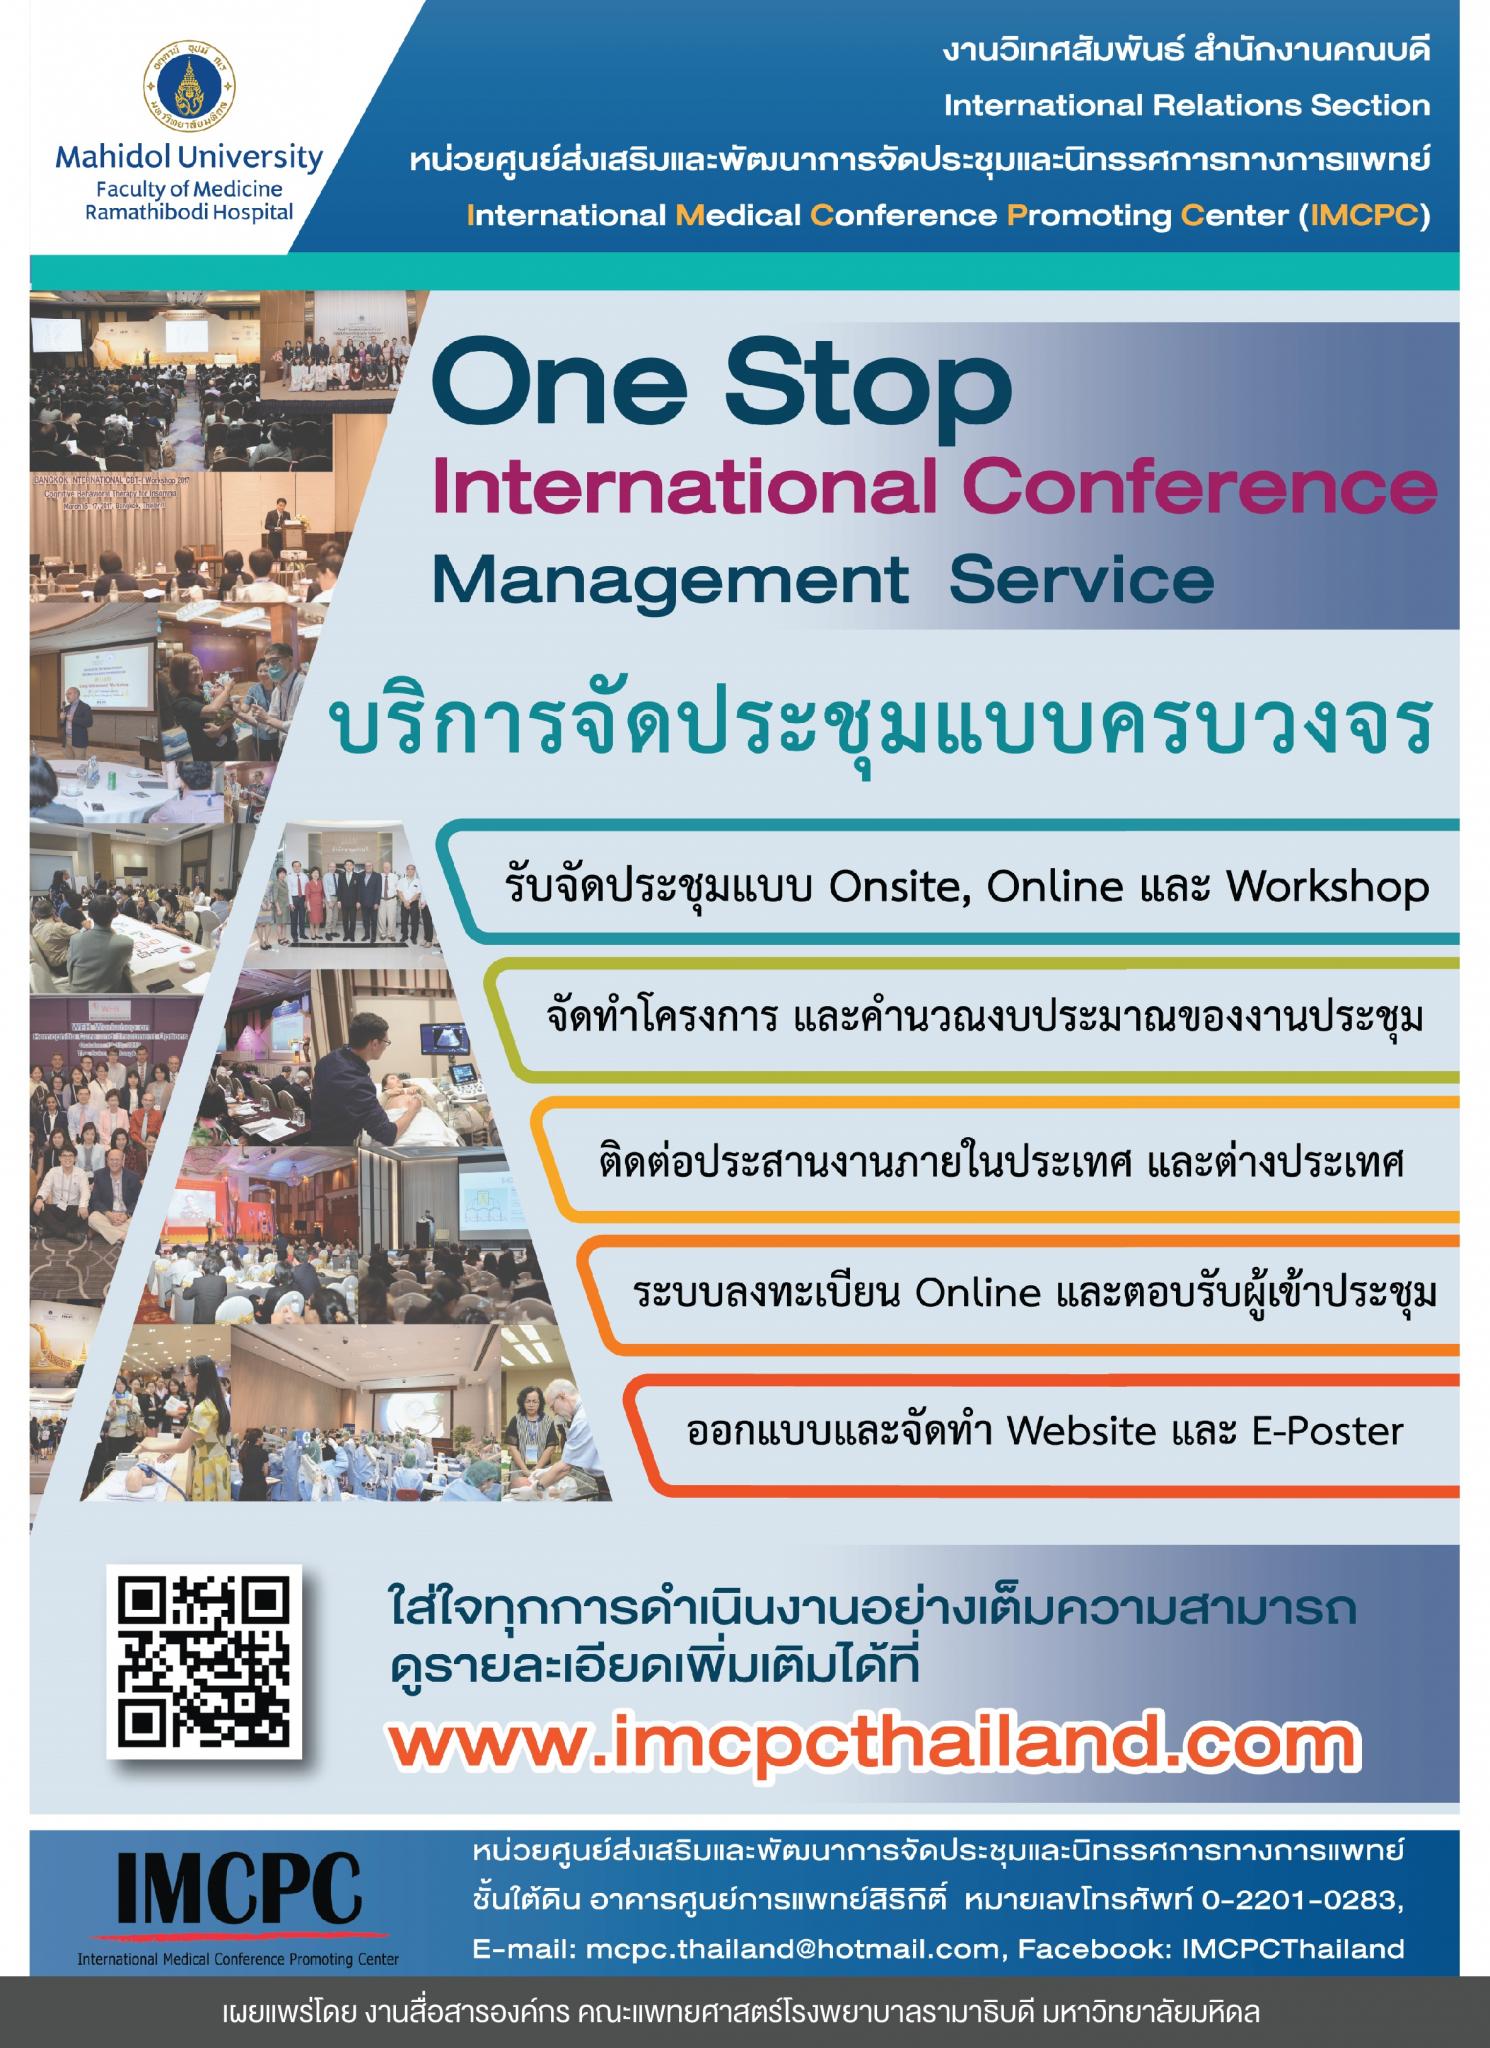 One Stop international Conference Management Service บริการจัดประชุมแบบครบวงจร